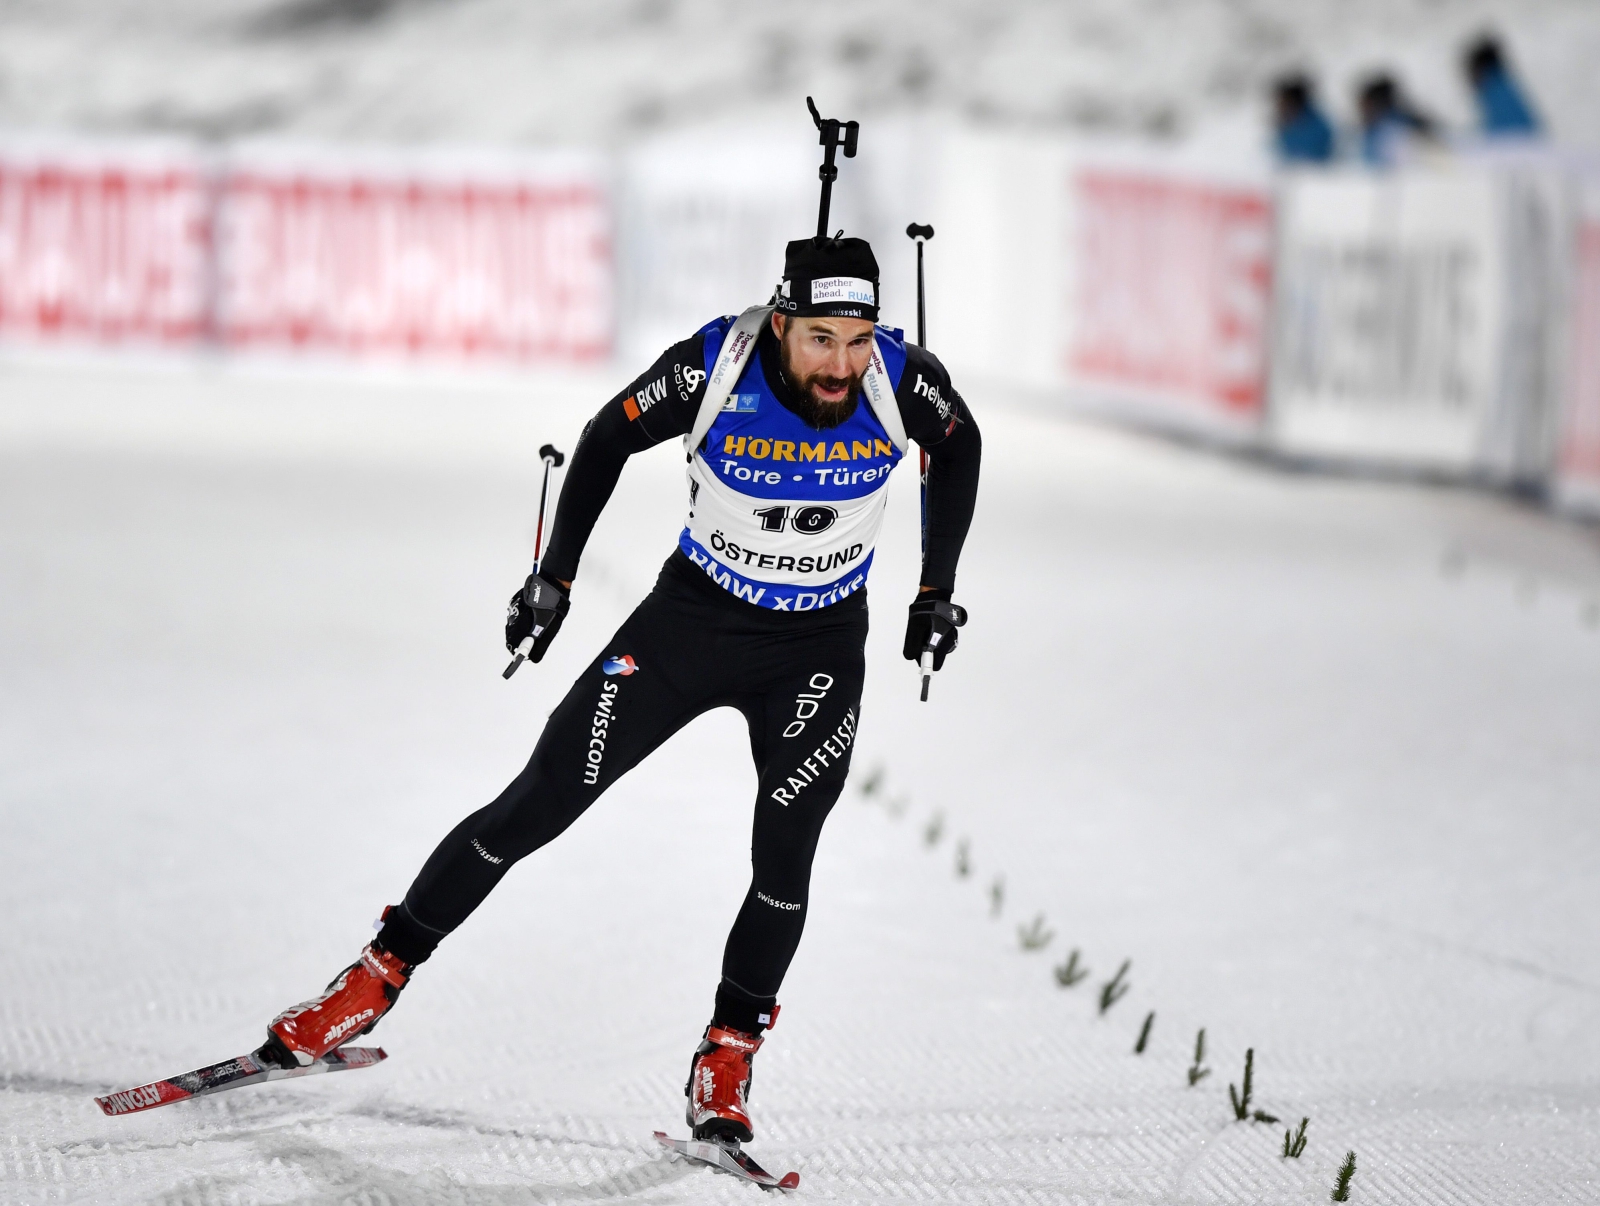 Zawodu Pucharu Świata w biathlonie w Ostersund. fot. EPA/ANDERS WIKLUND SWEDEN OUT